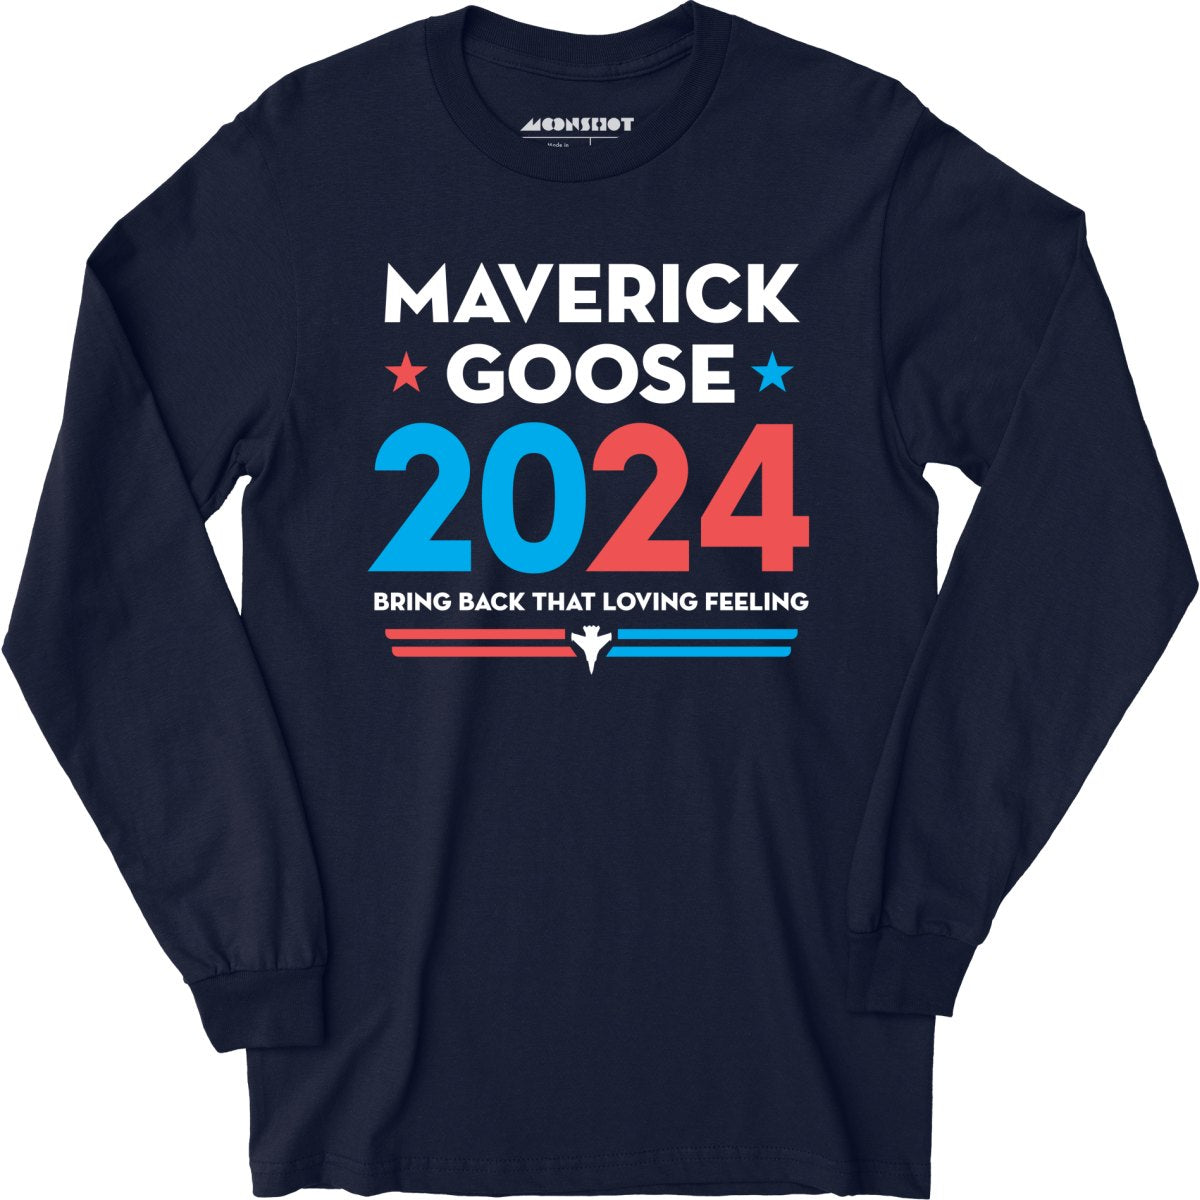 Maverick Goose 2024 - Long Sleeve T-Shirt